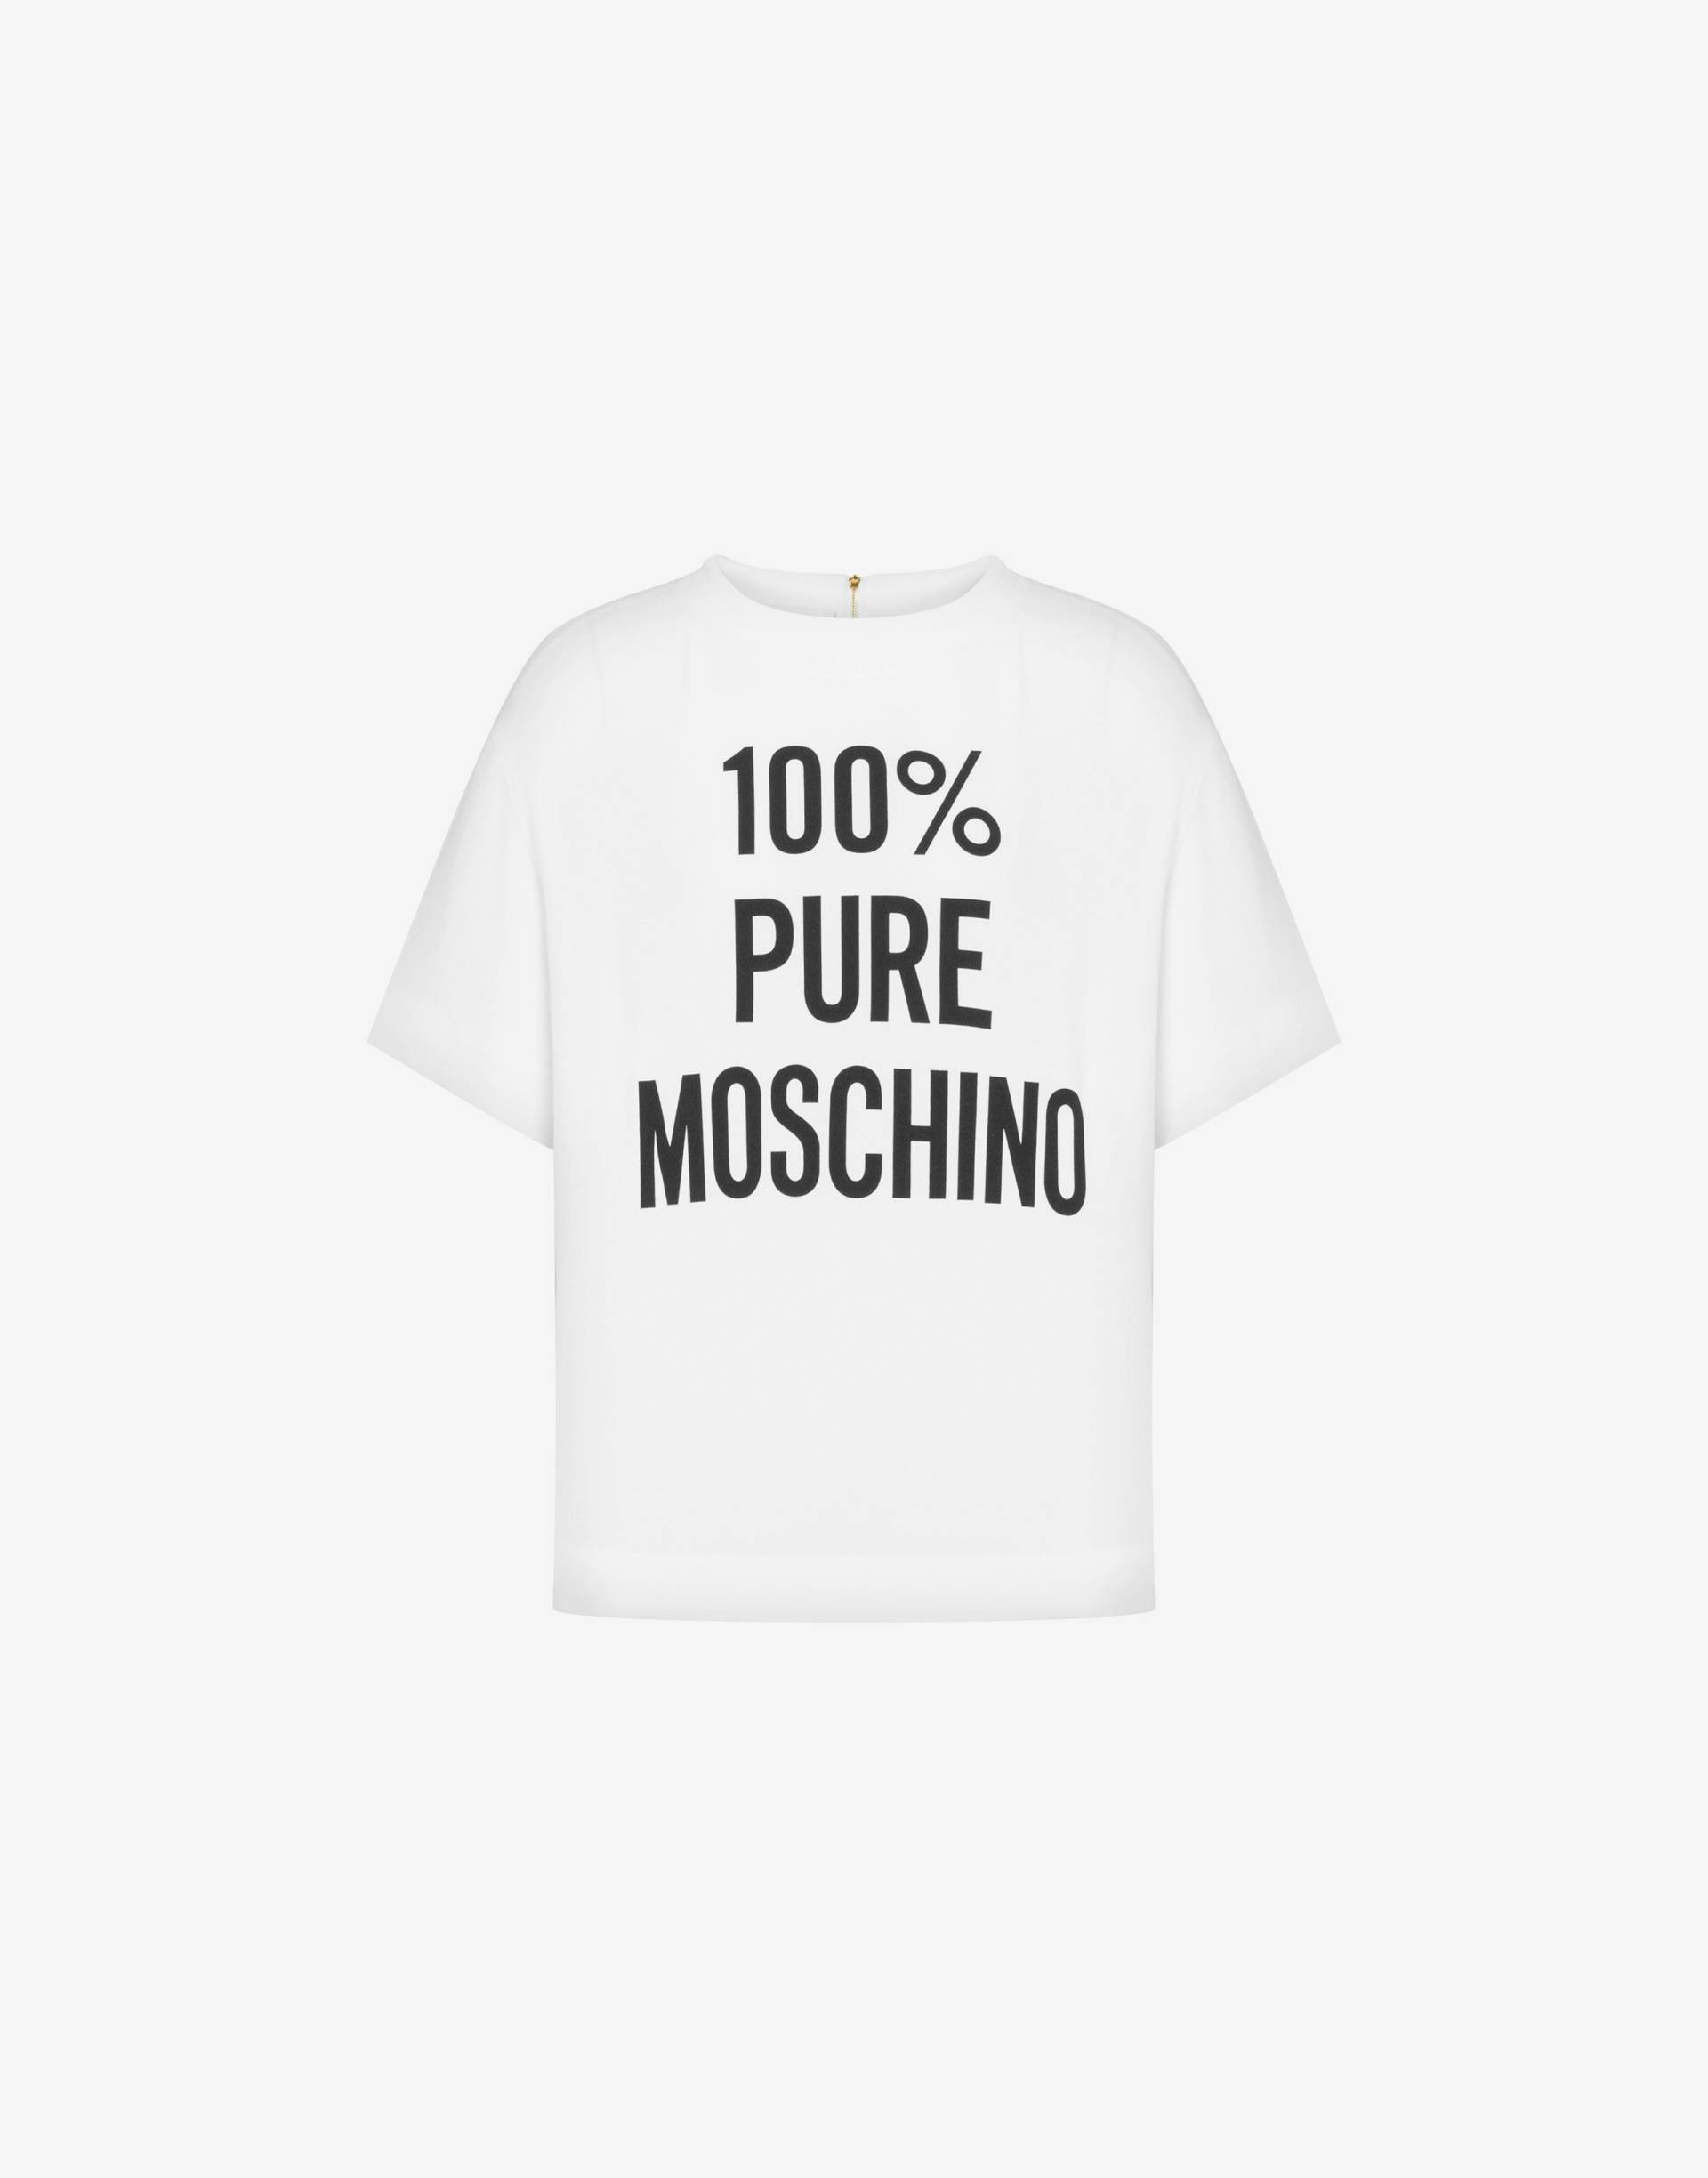 T-shirt Aus Envers-satin 100% Pure Moschino Print von Moschino